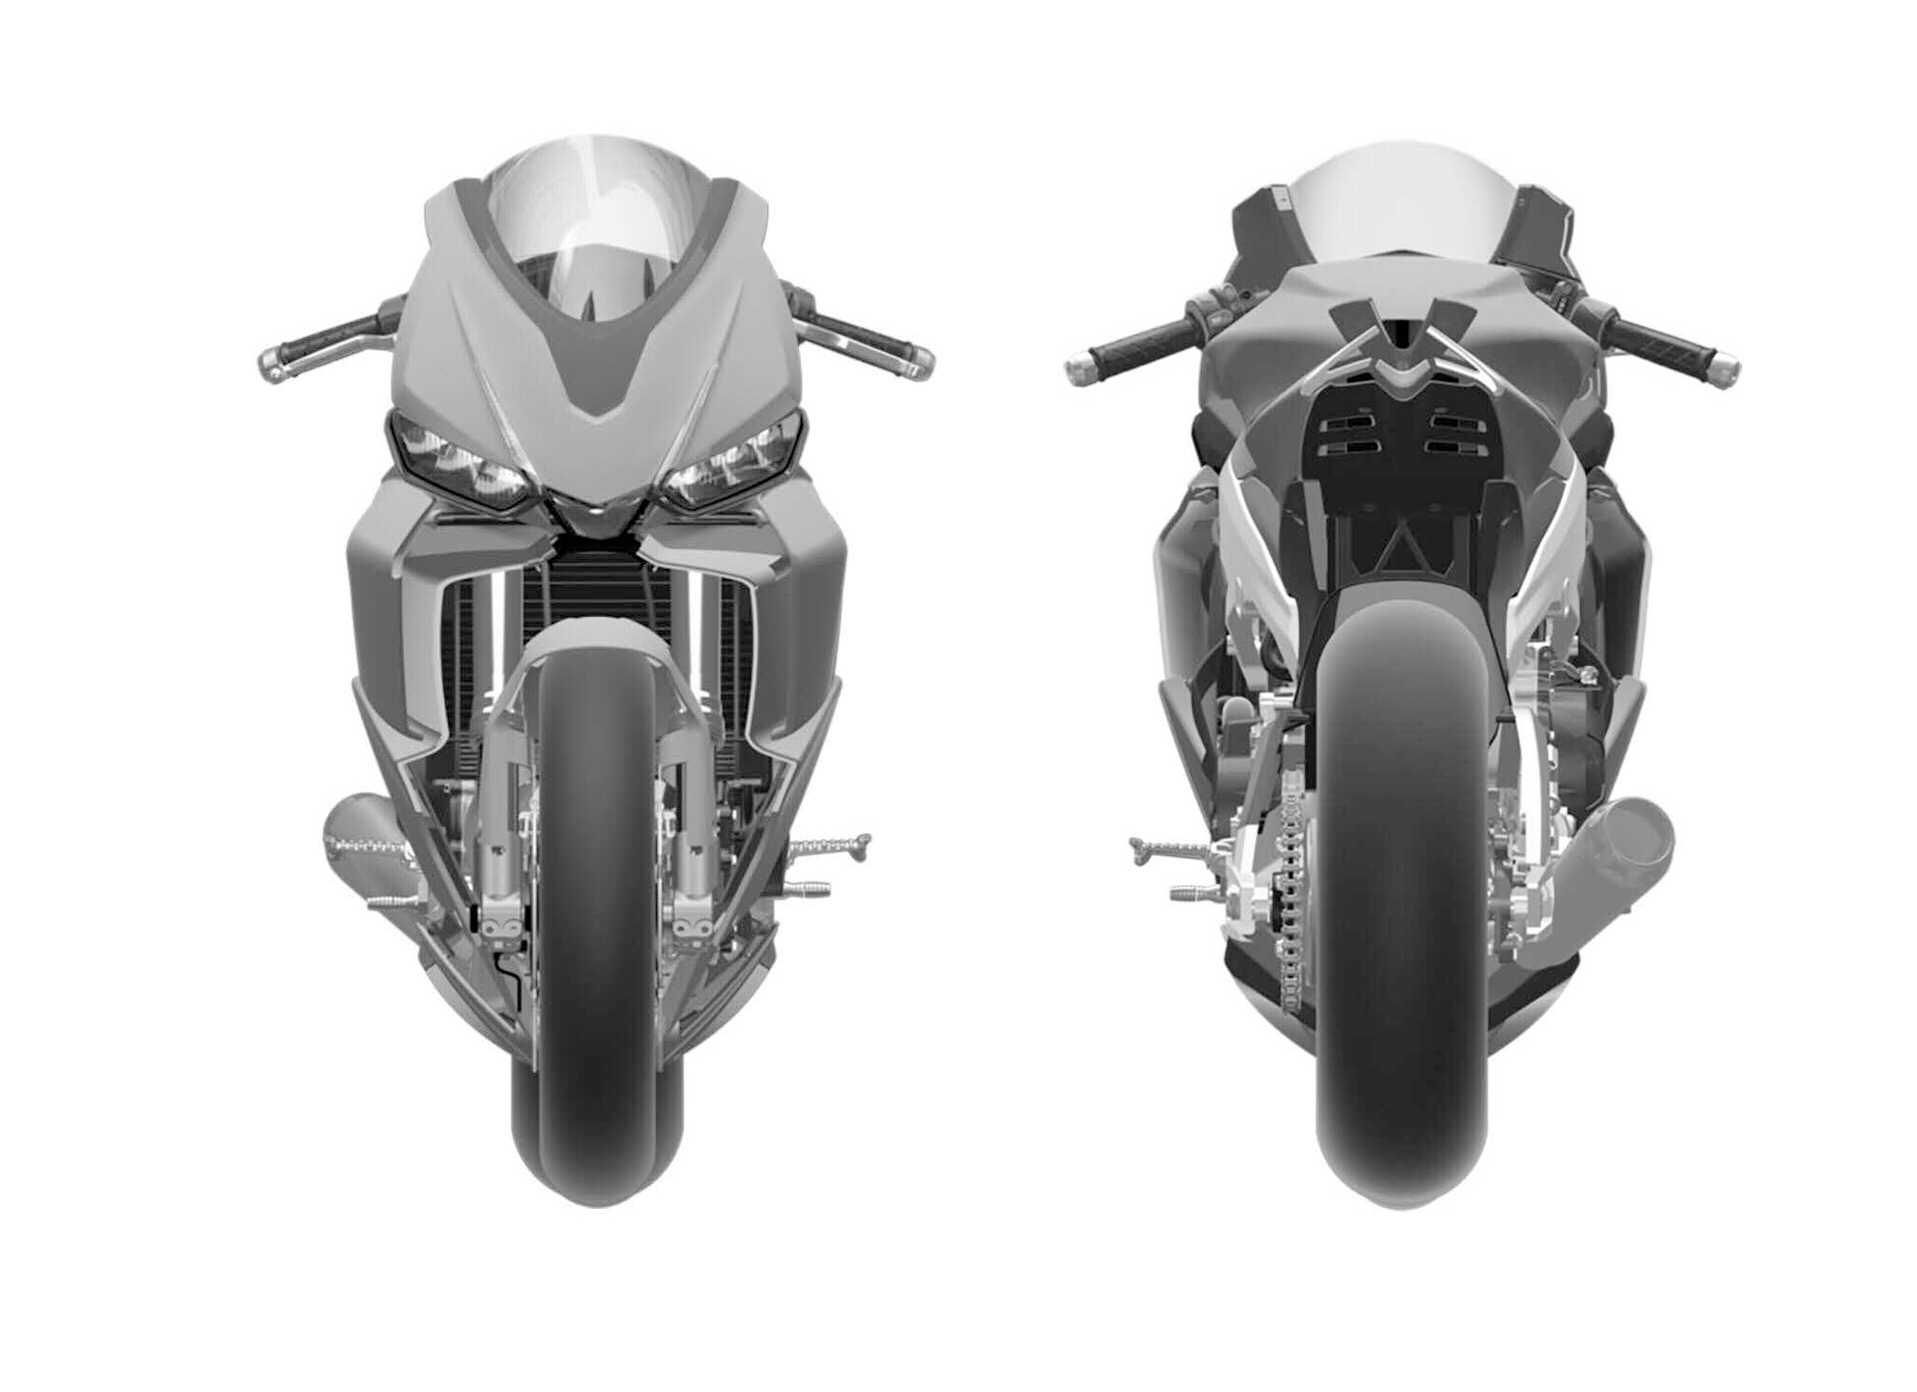 053019 2020 aprilia rs660 concept design front and rear txt 3